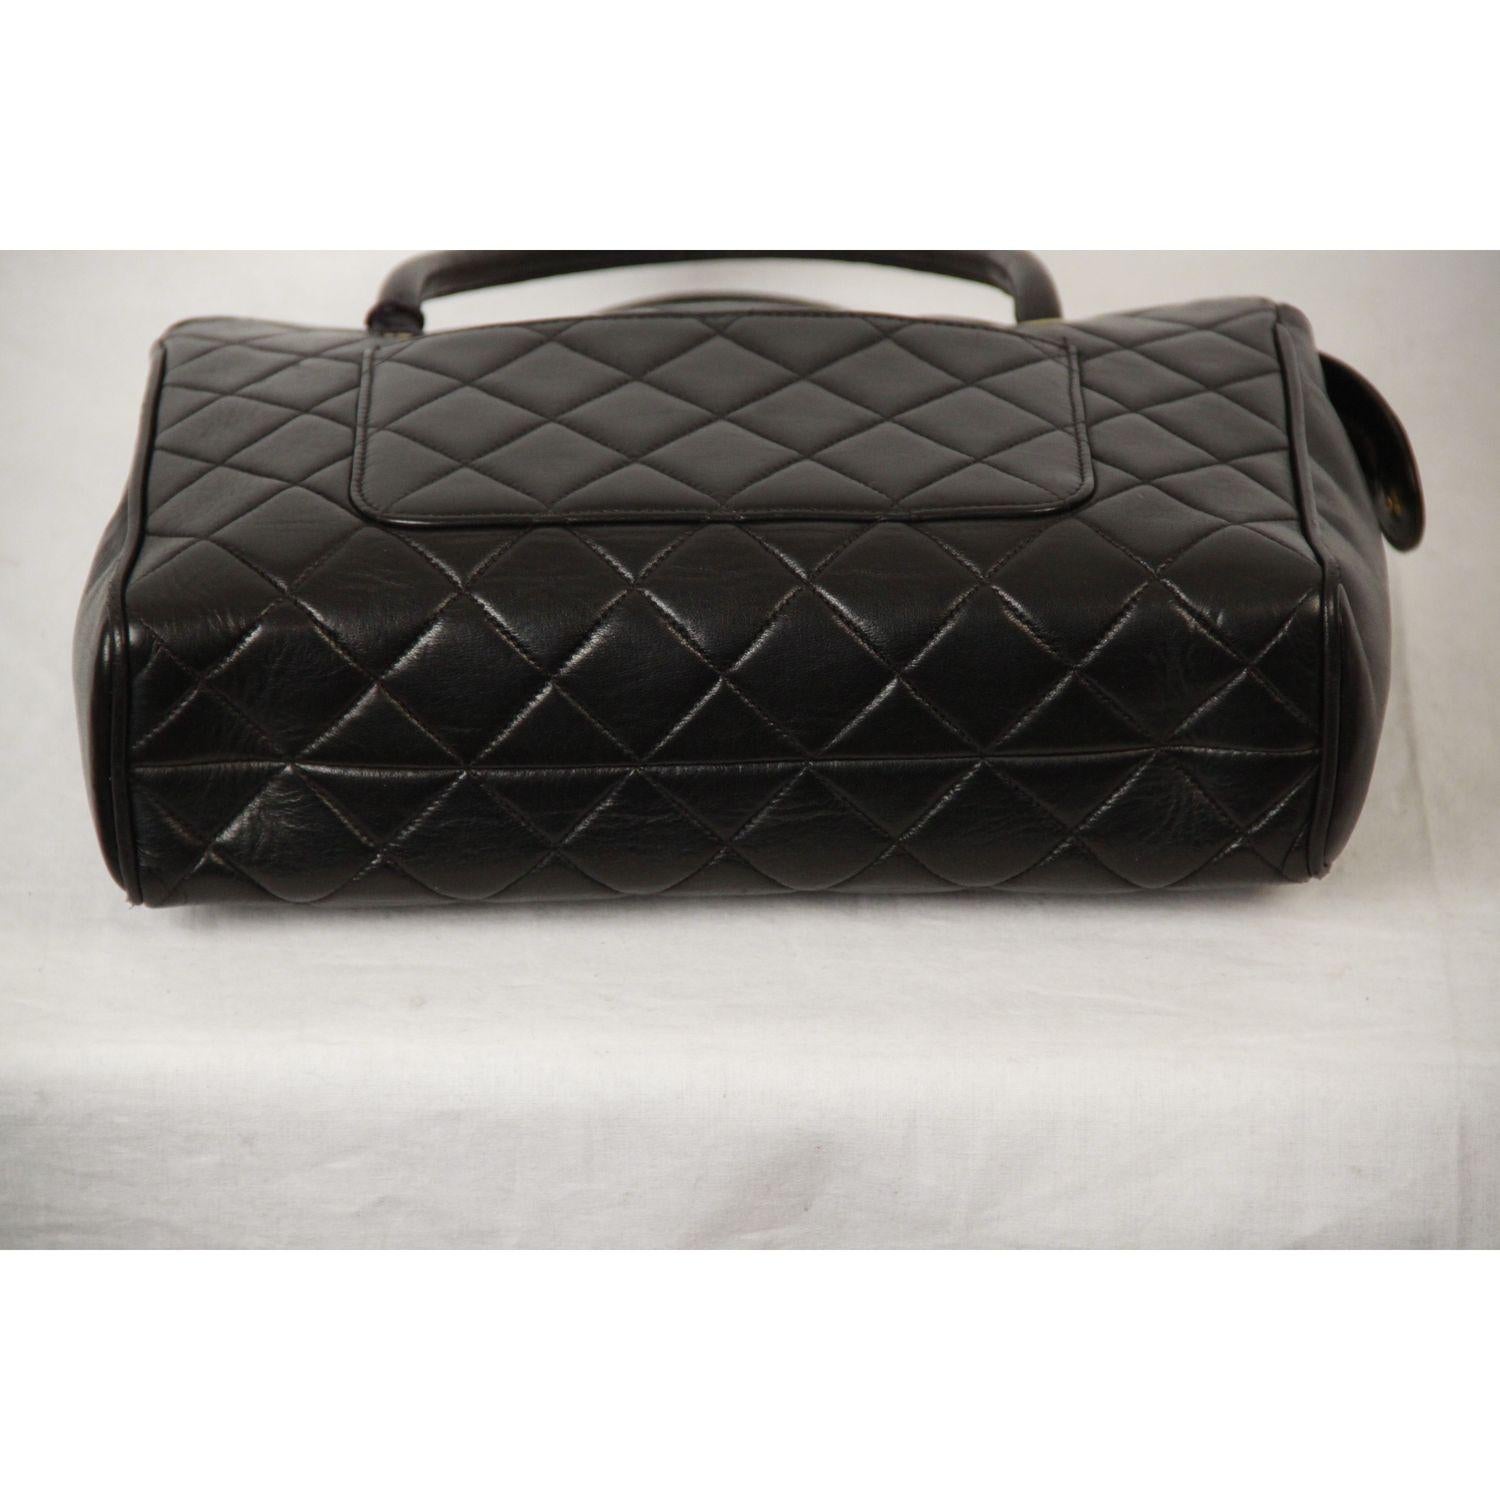 Chanel Vintage Black Quilted Handbag Satchel with Exterior Pockets 5